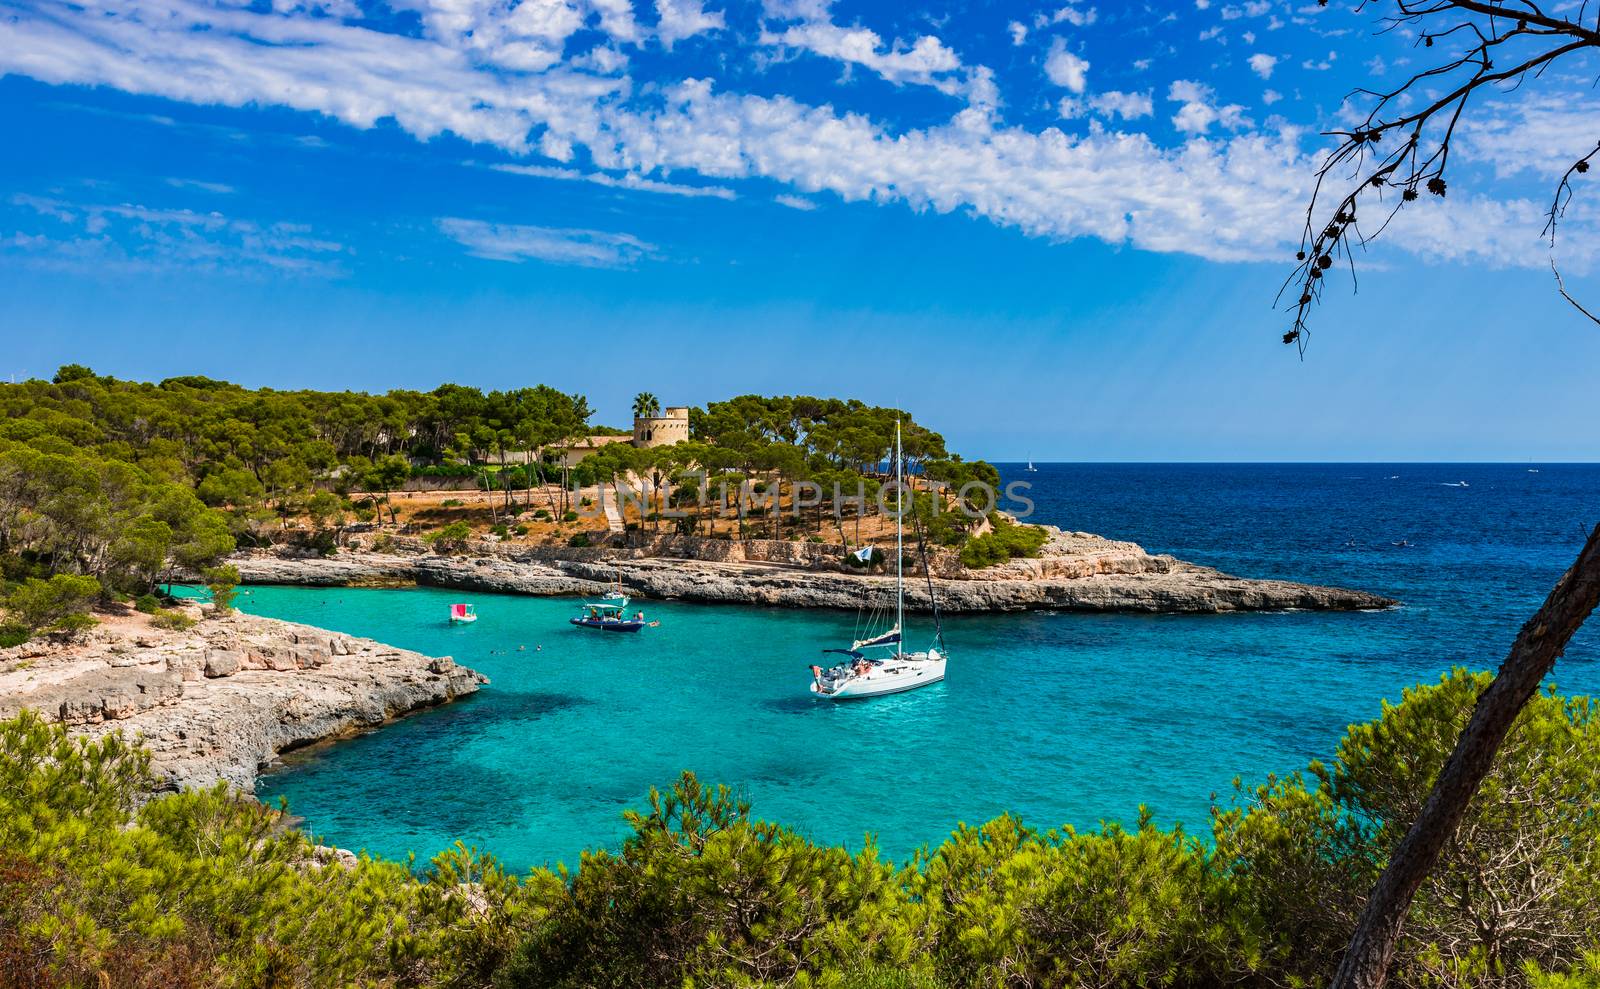 Beautiful bay with boats at the coast on Majorca island, Spain Mediterranean Sea